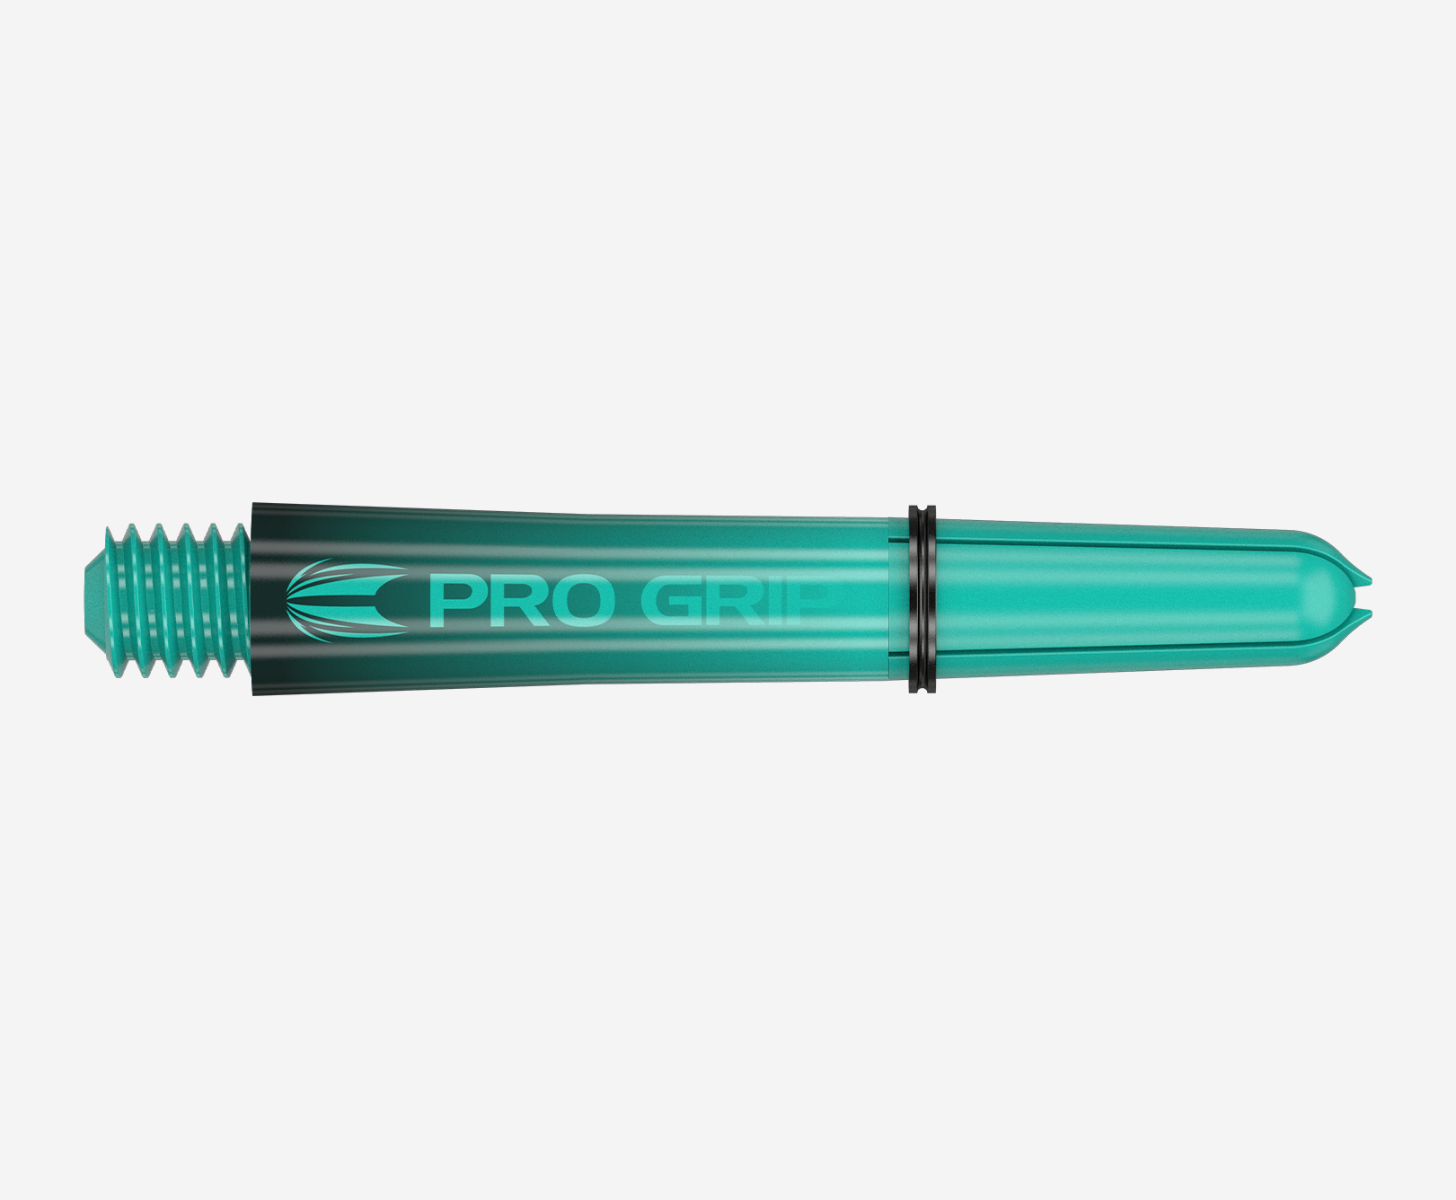 Target Pro Grip Sera Shafts - Black & Aqua